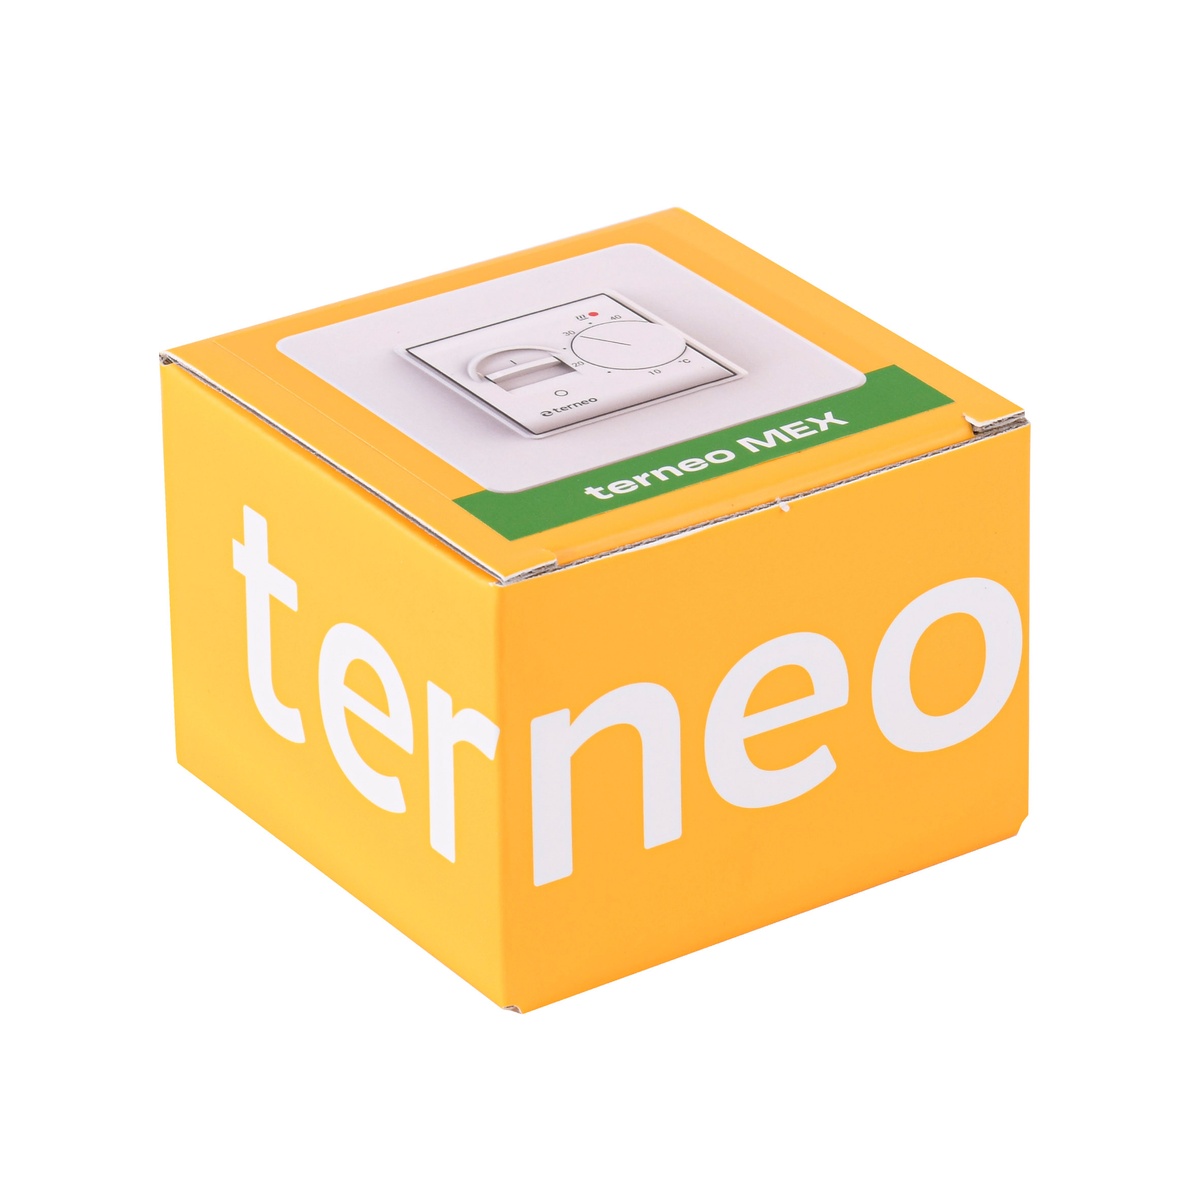 Комнатный терморегулятор TERNEO MEX механический 000027918